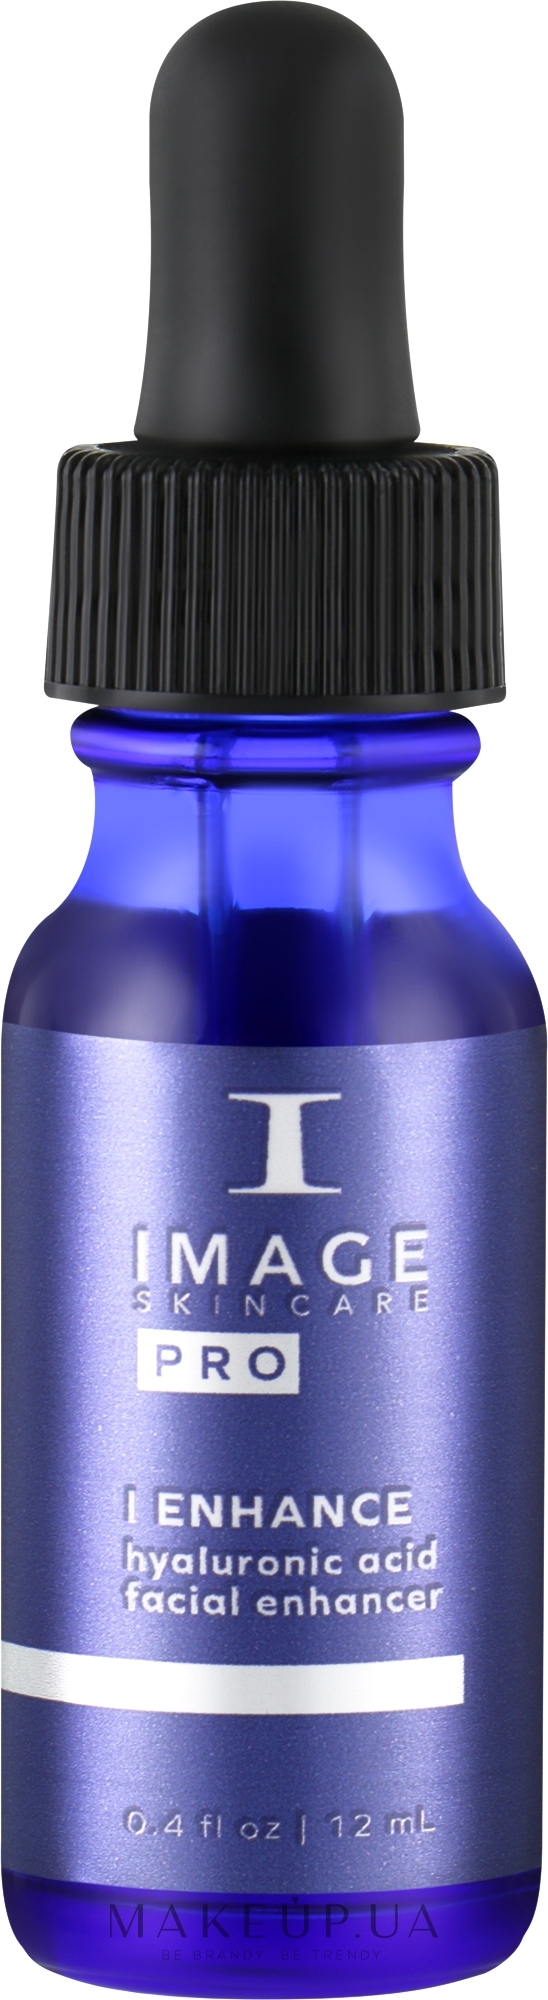 Концентрат для лица "Гиалуроновая кислота" - Image Skincare I Enhance 25% Hyaluronic Acid Facial Enhancer — фото 14.8ml